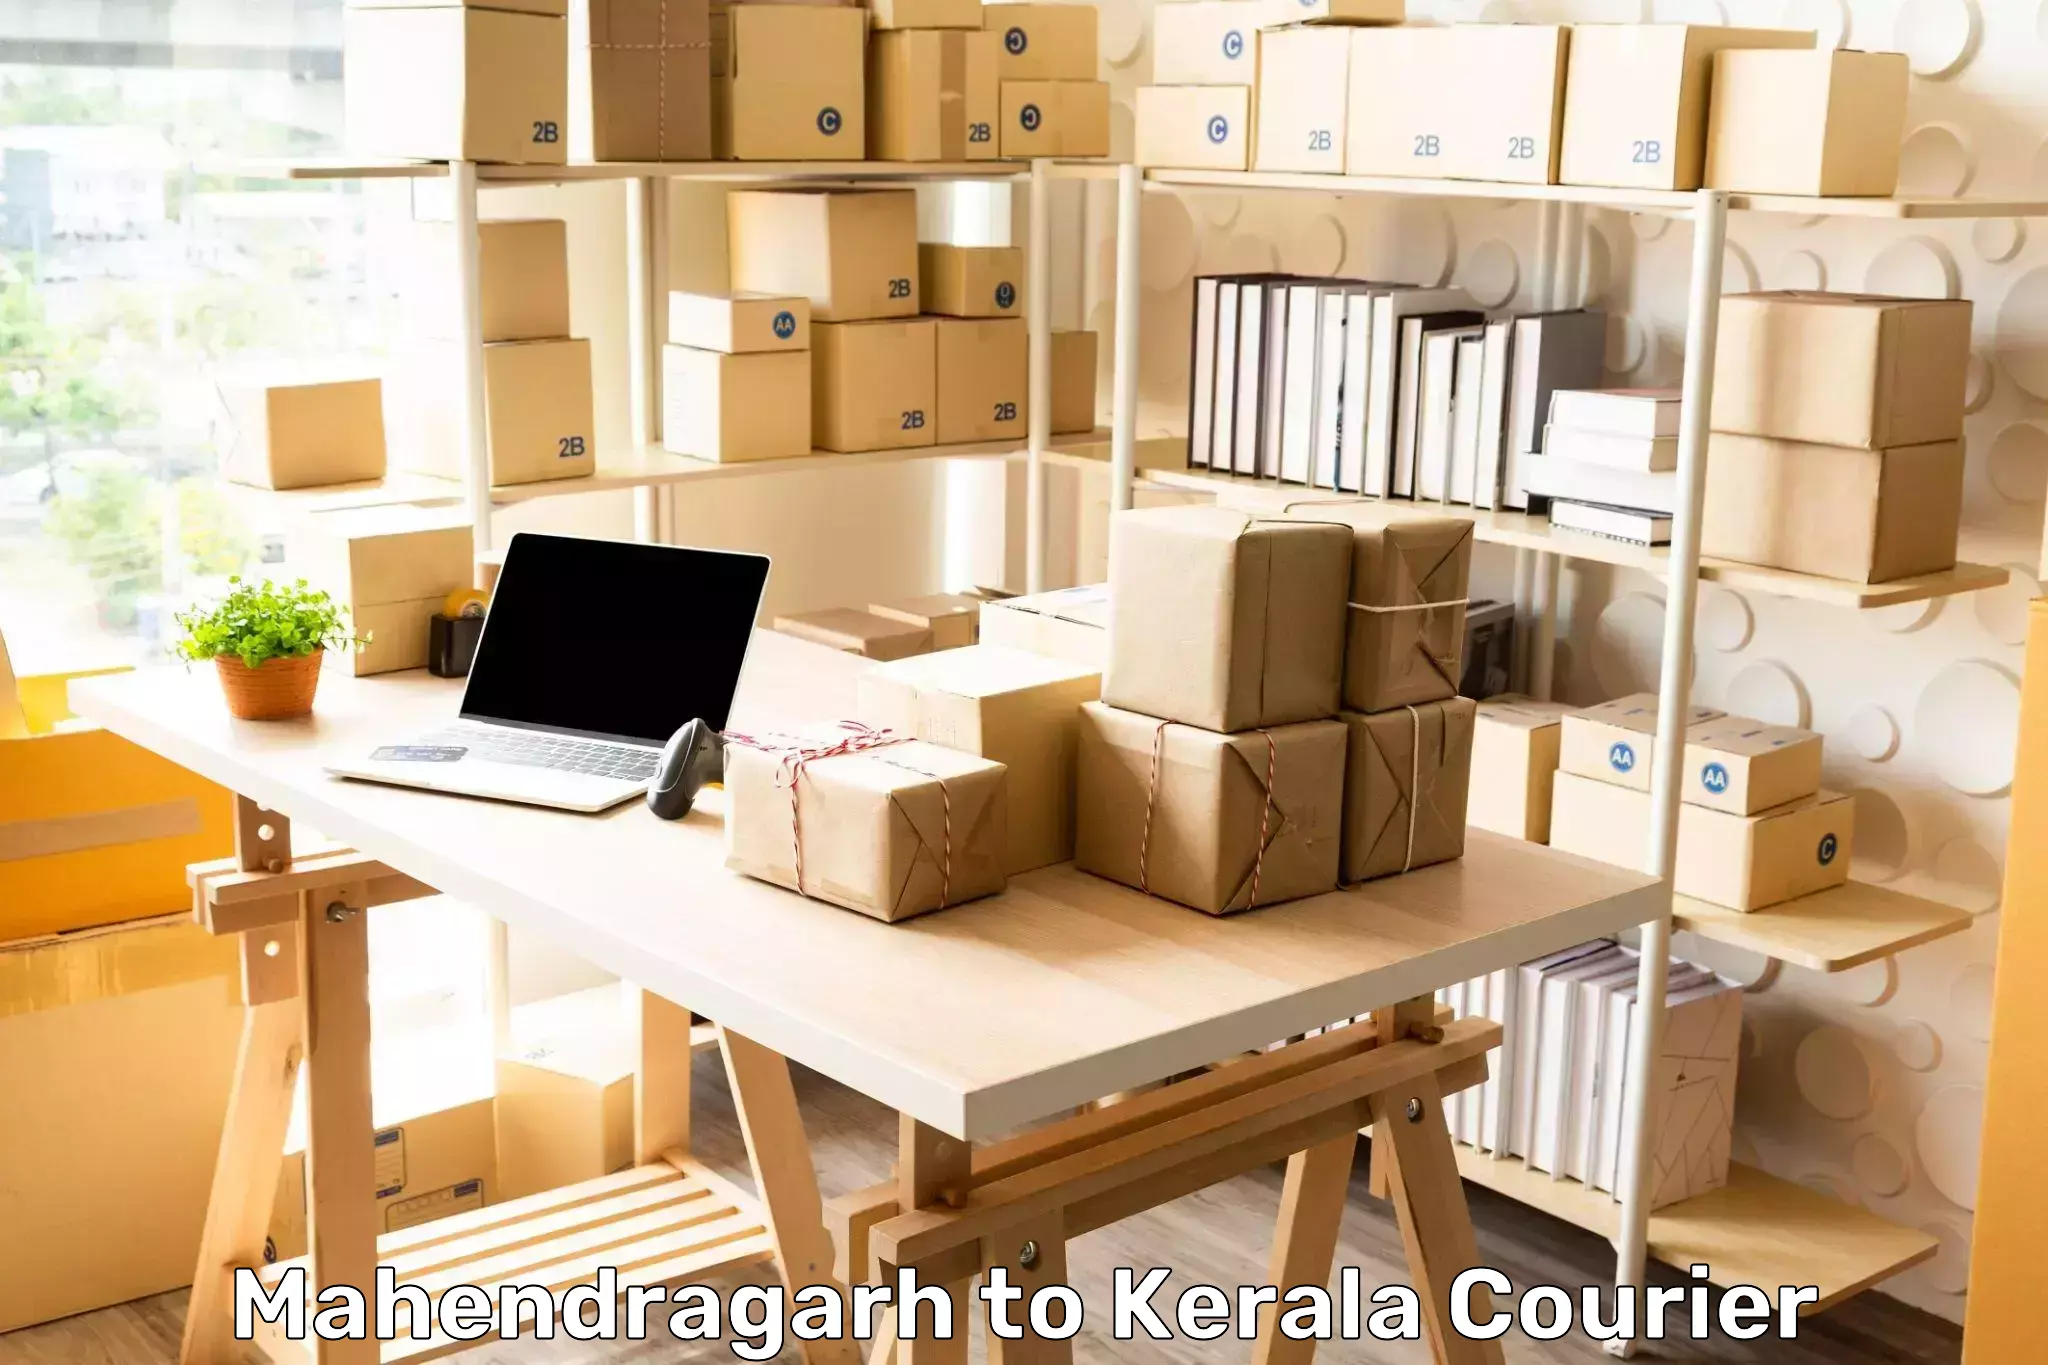 Reliable logistics providers Mahendragarh to Kerala